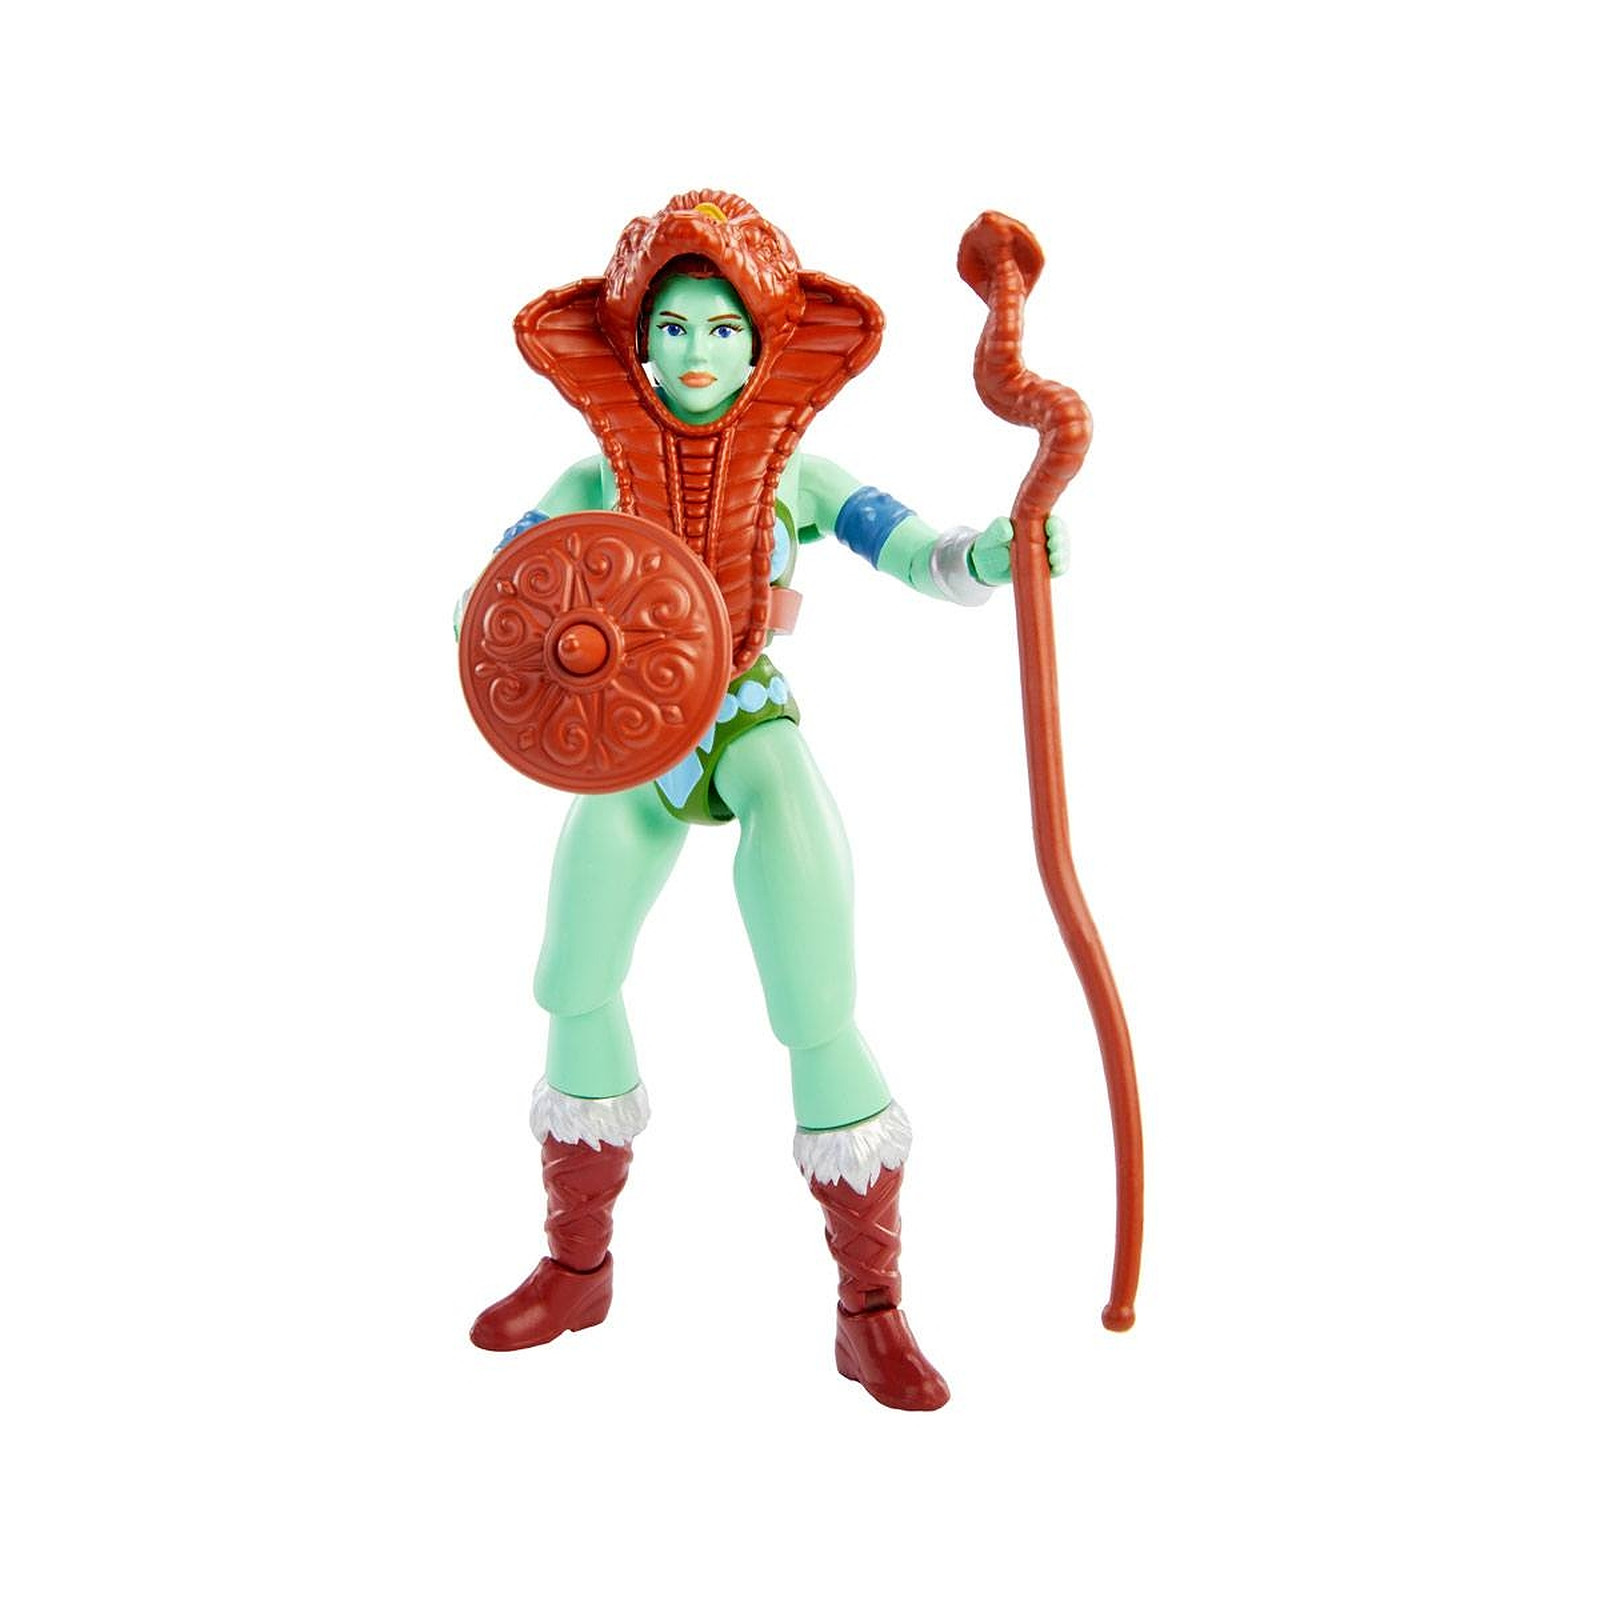 Les Maitres de l'Univers Origins 2021 - Figurine Green Goddess 14 cm - Figurines Mattel